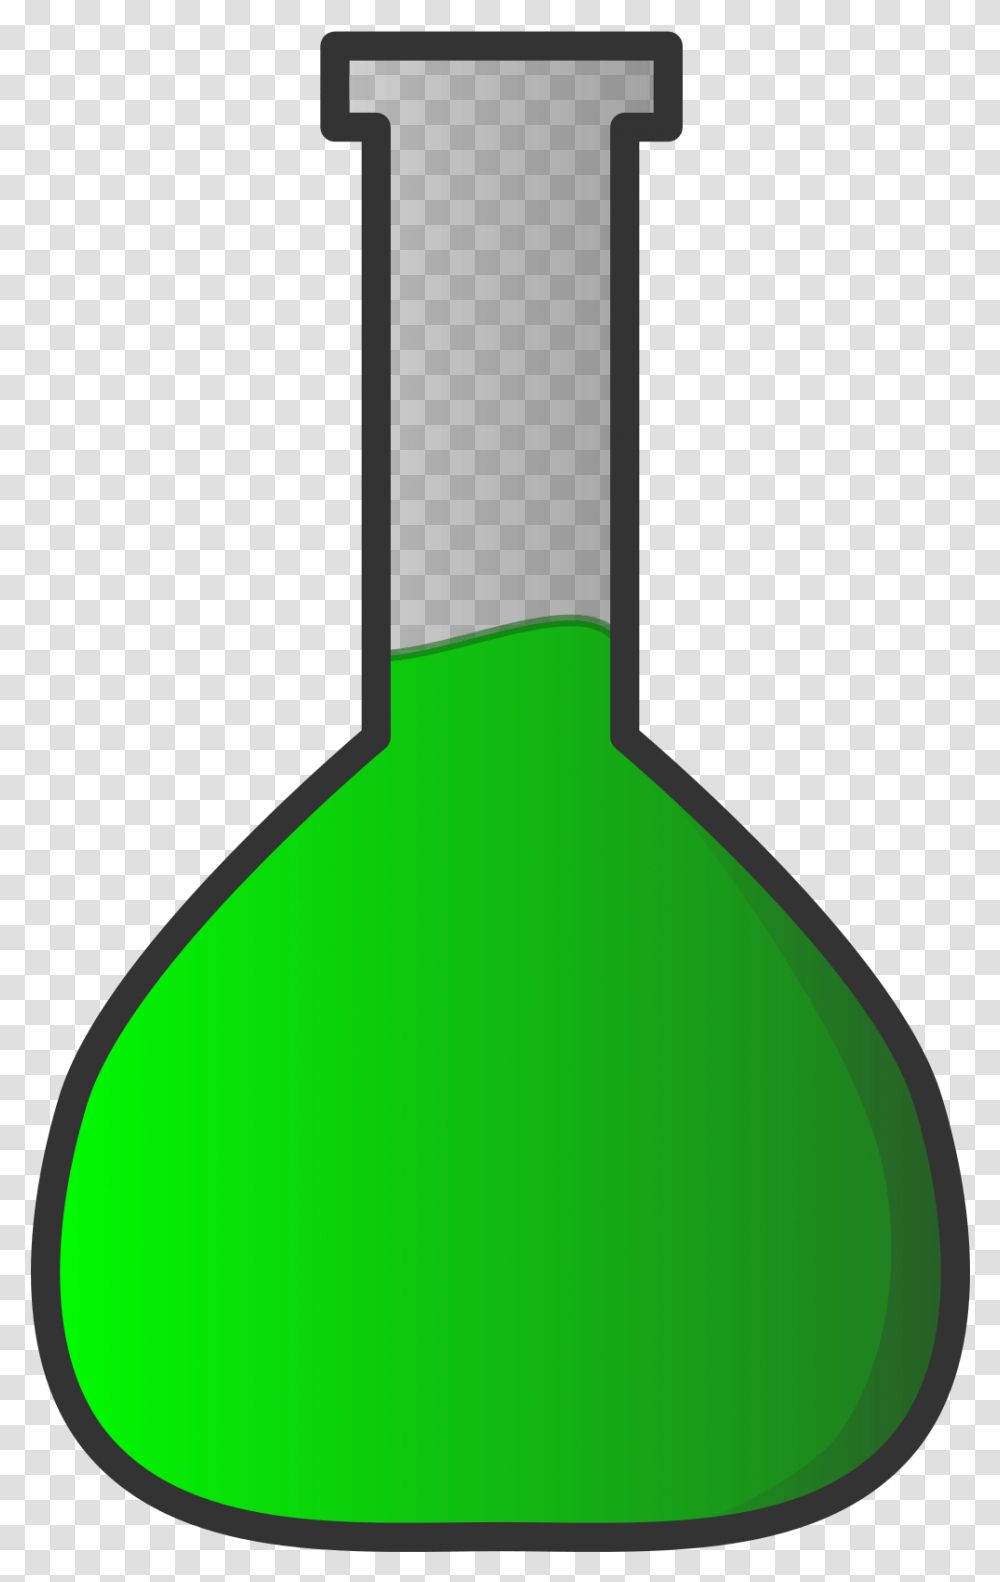 Volumetric Flask Icon Download, Alcohol, Beverage, Drink, Bottle Transparent Png